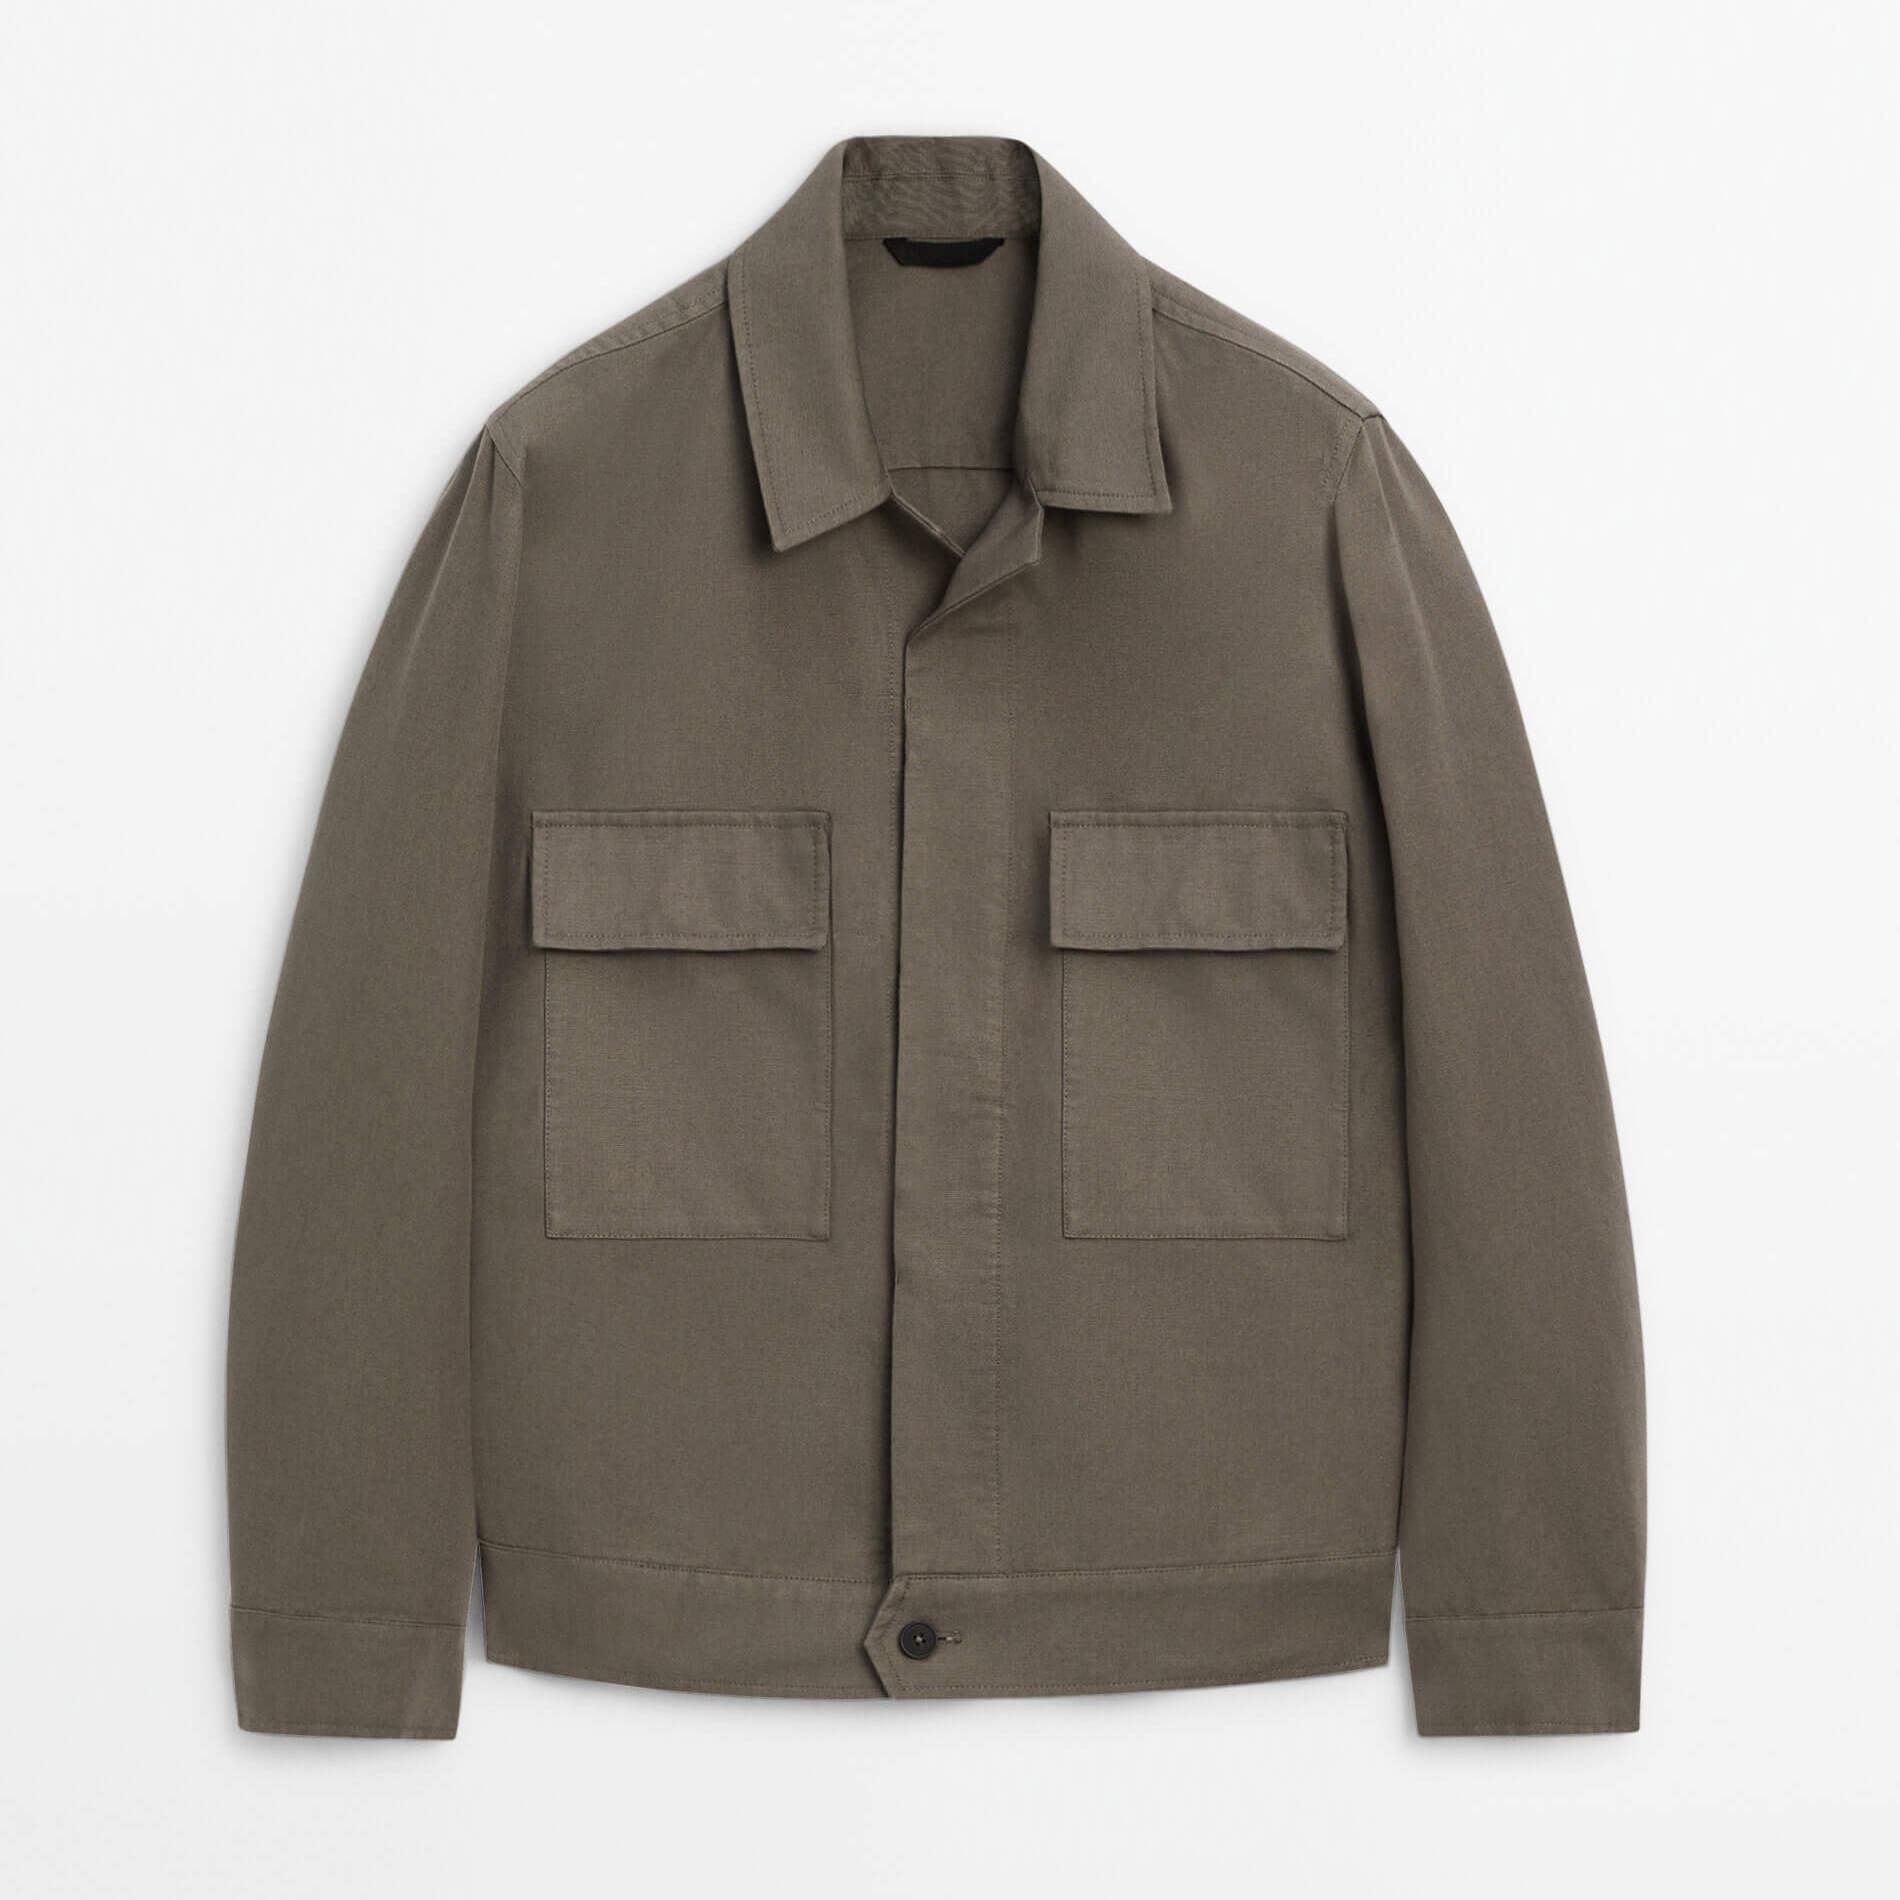 Куртка Massimo Dutti Cotton With Chest Pockets Studio, зеленый куртка рубашка massimo dutti zip up with chest pockets хаки